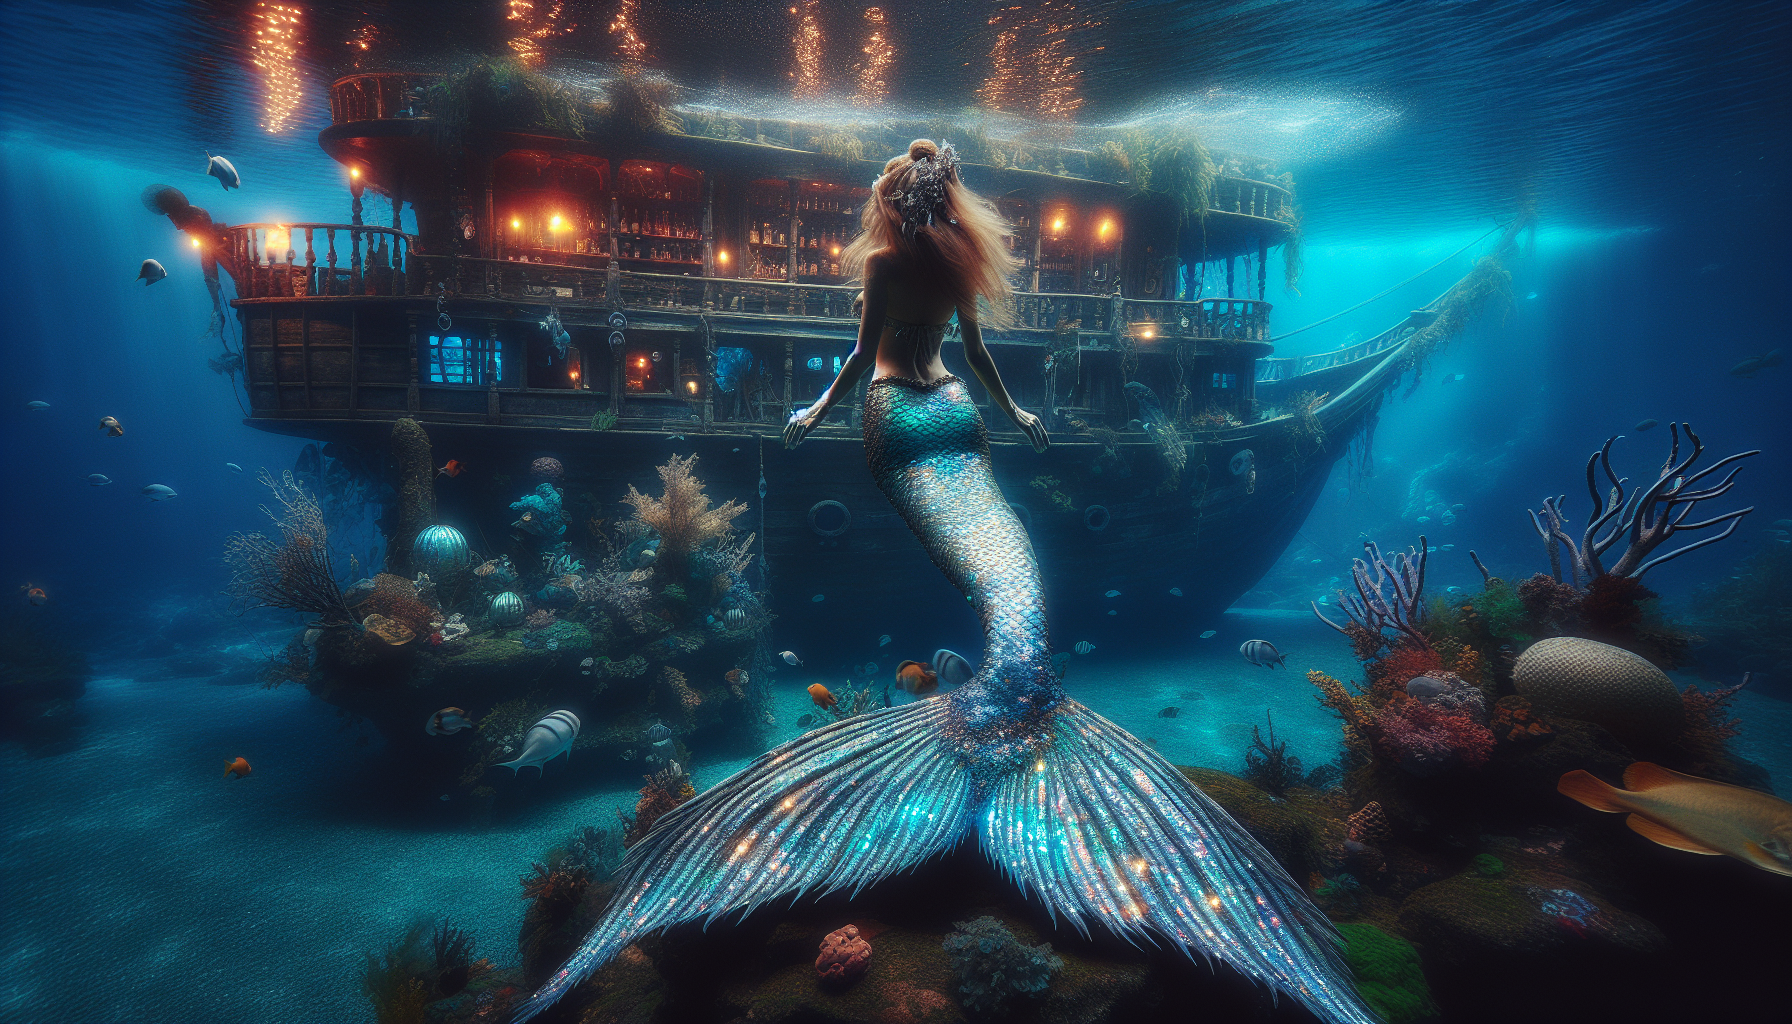 A mesmerizing mermaid swimming gracefully underwater